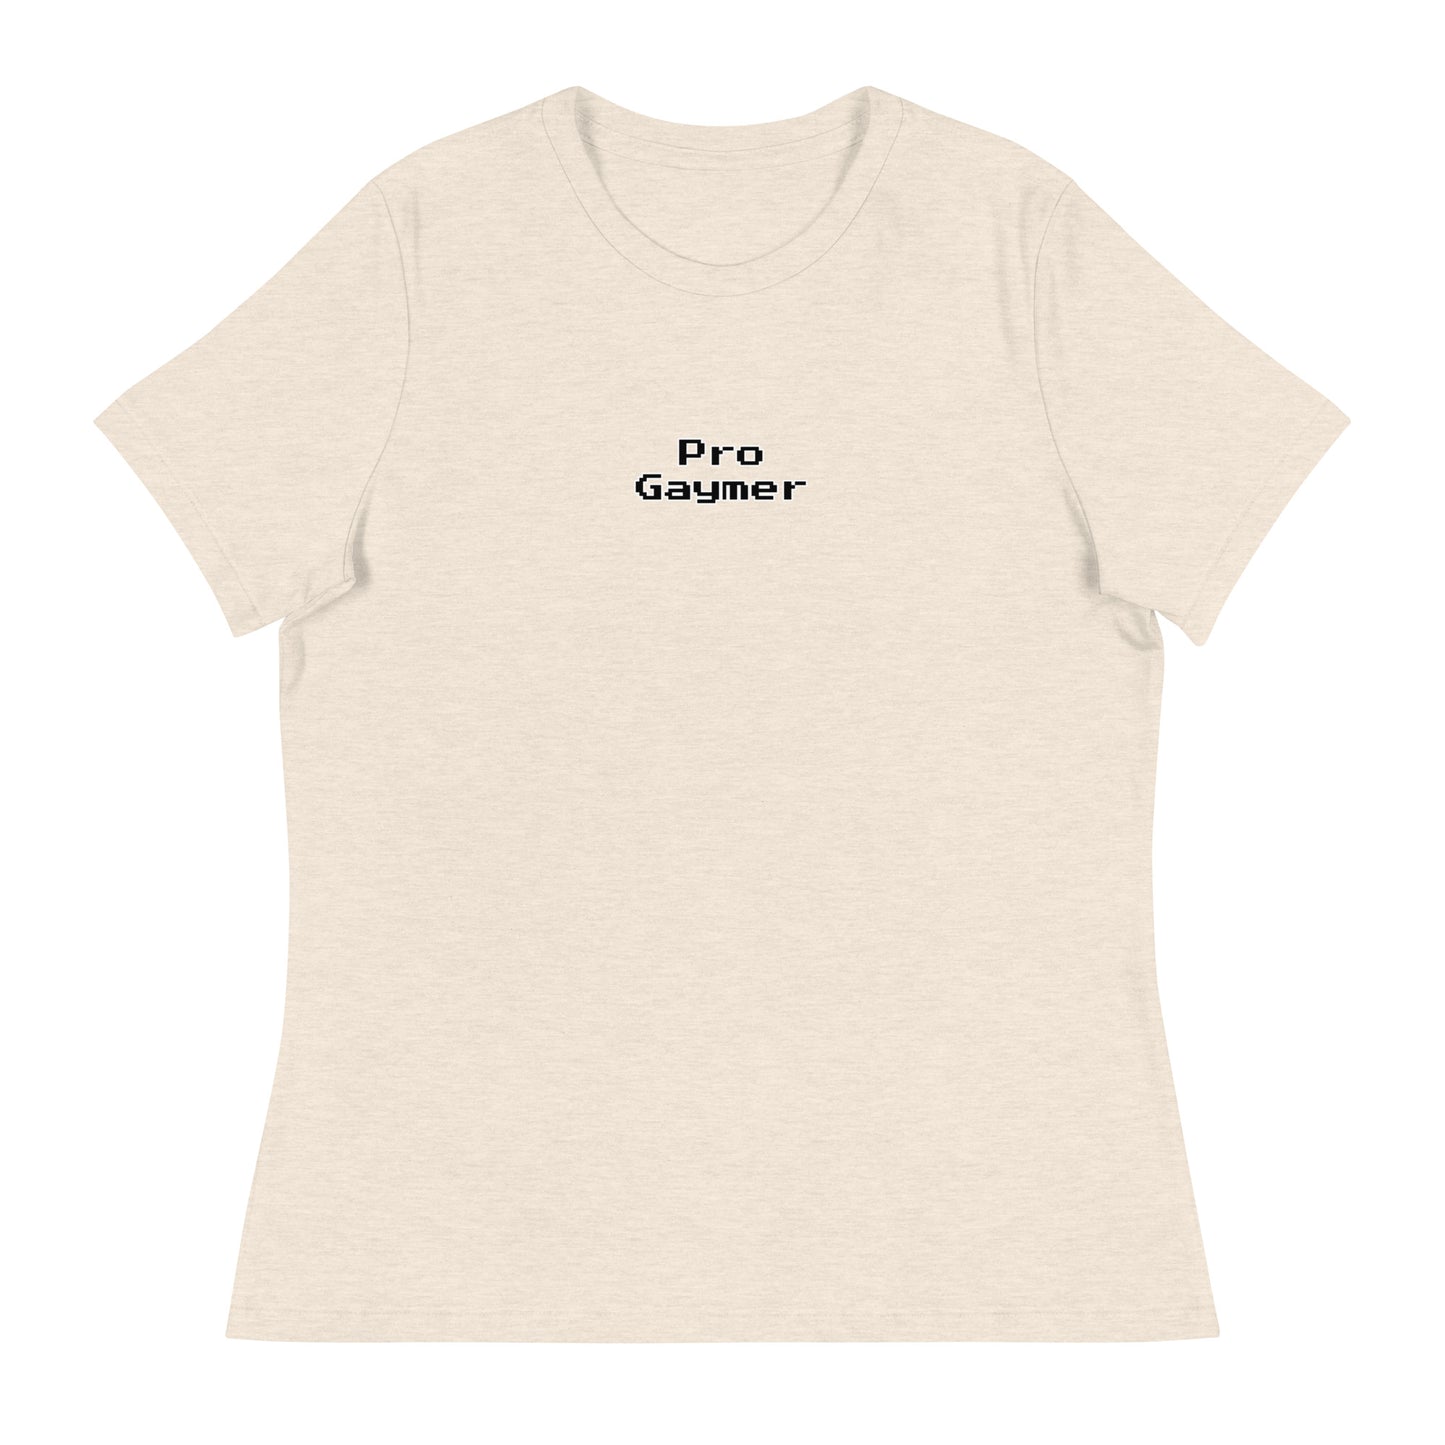 Pro Gaymer - Contoured, Relaxed T-Shirt (B)